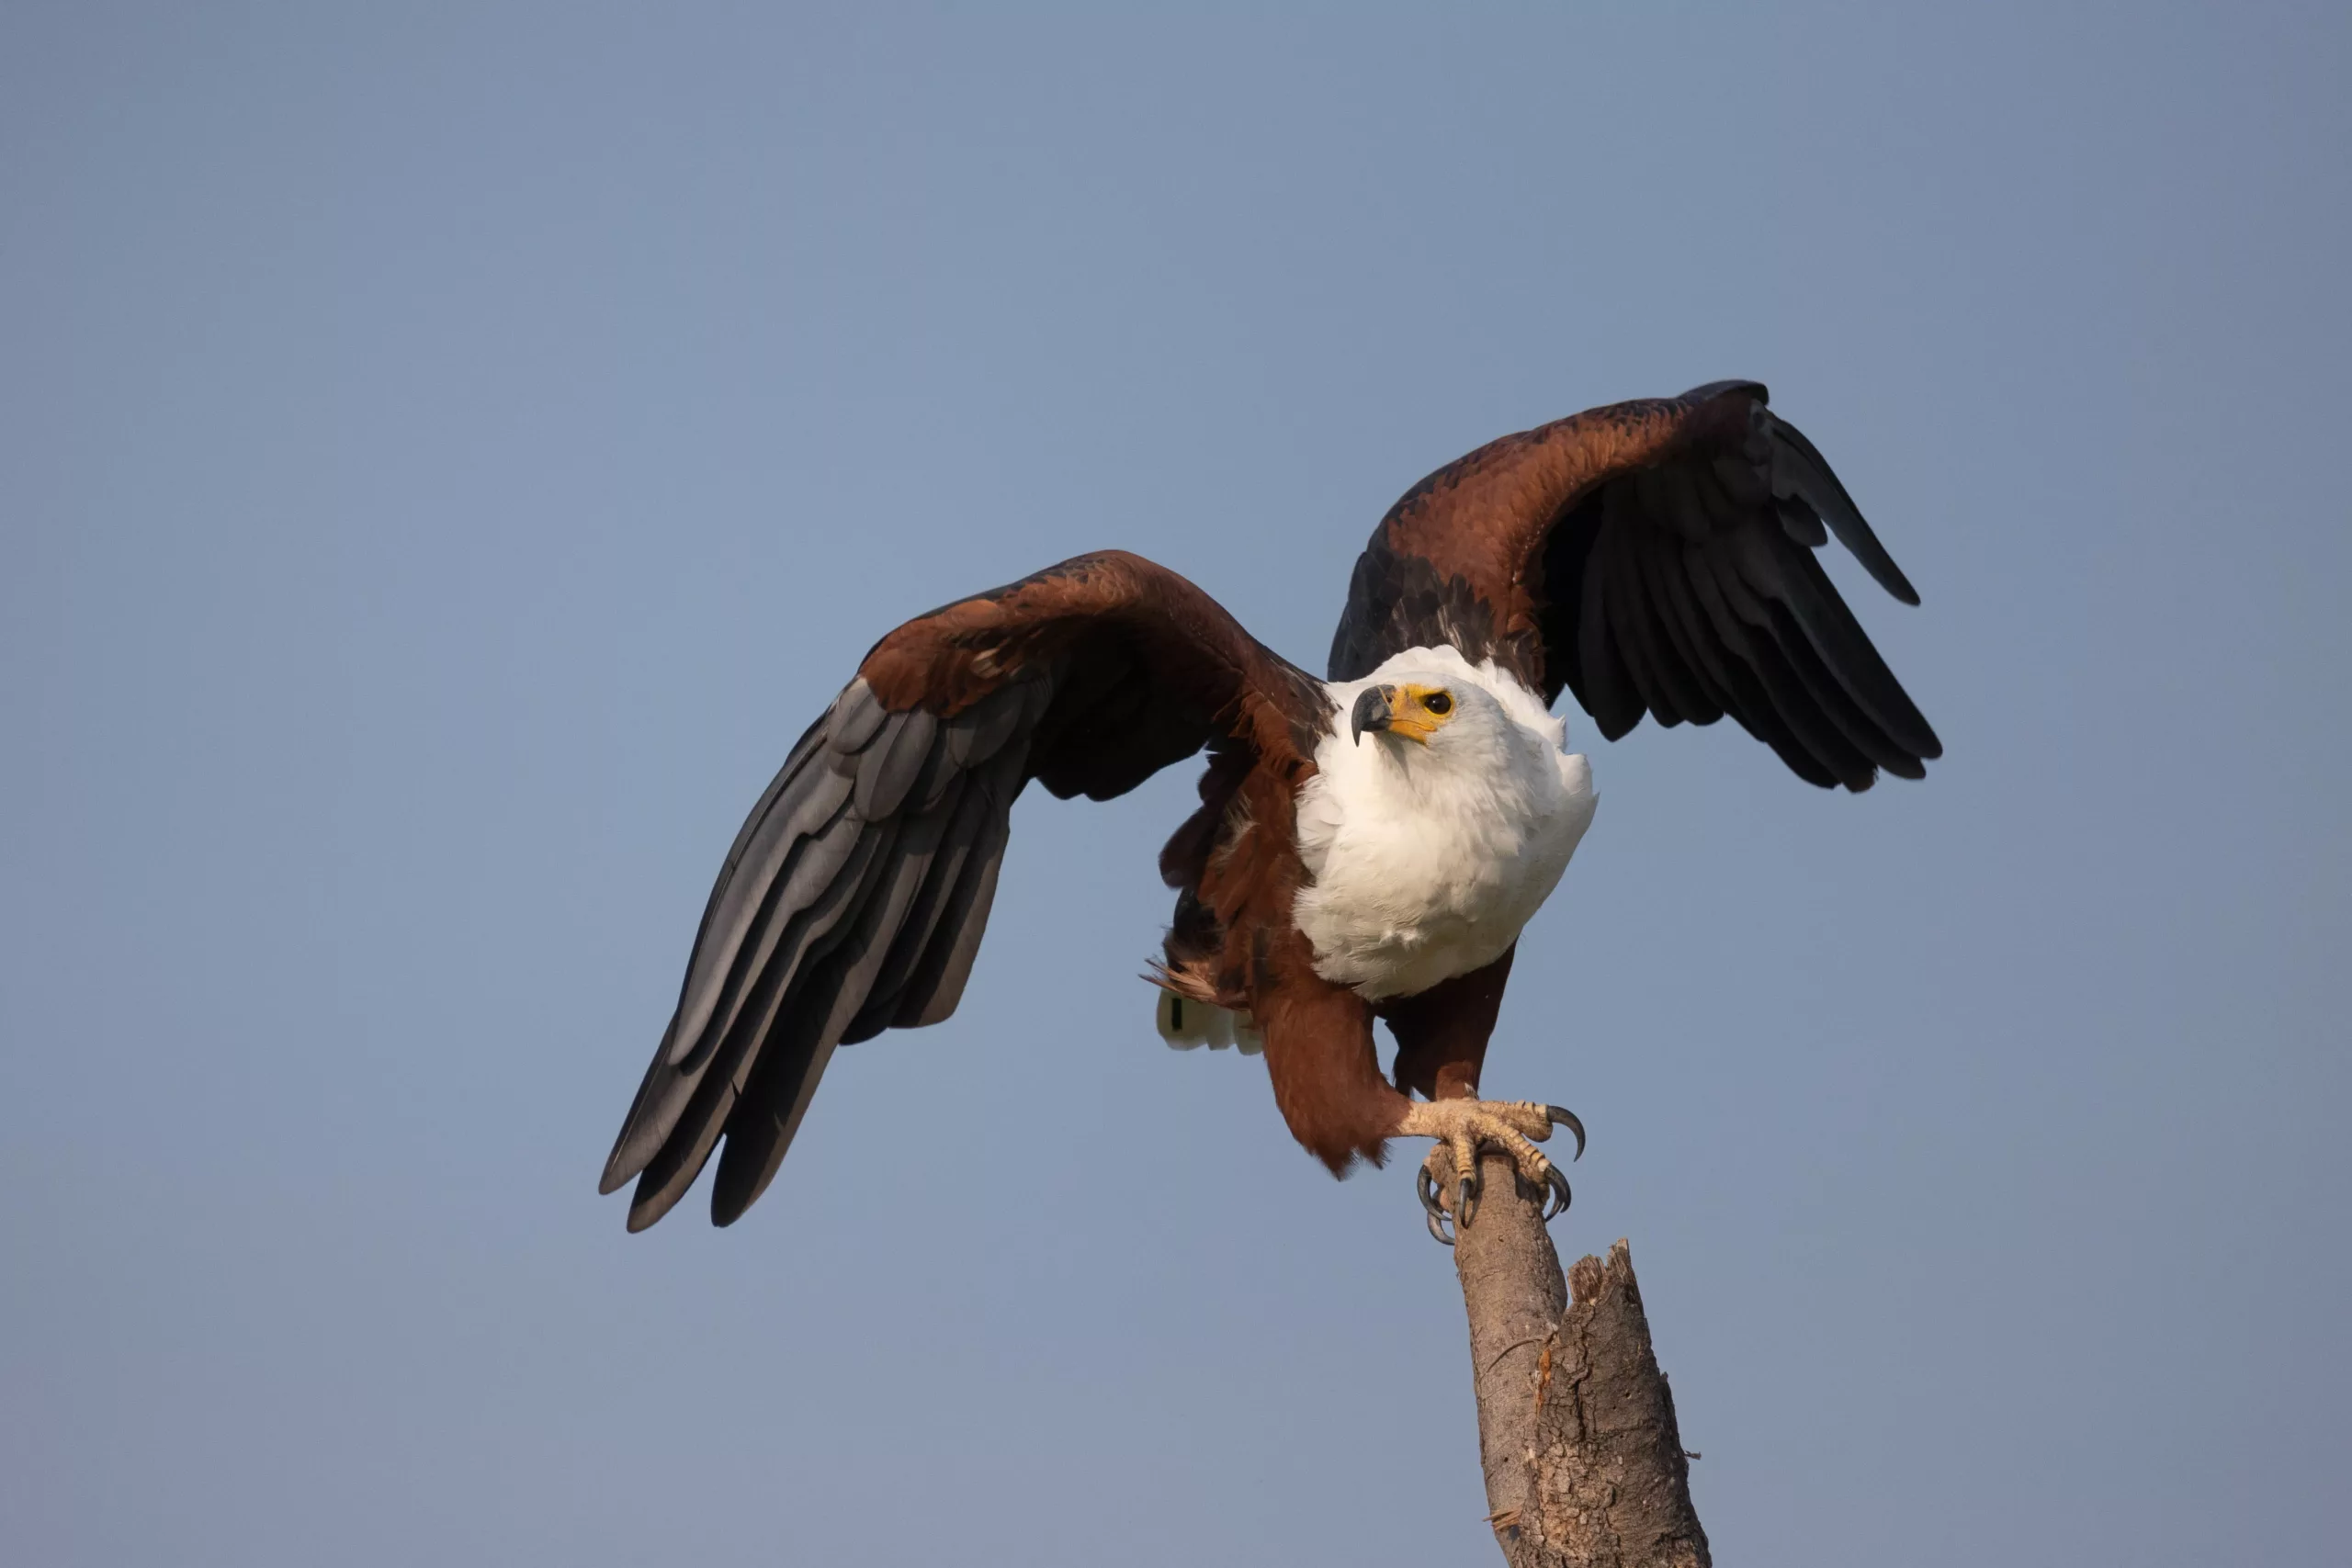 sabine stols fish eagle